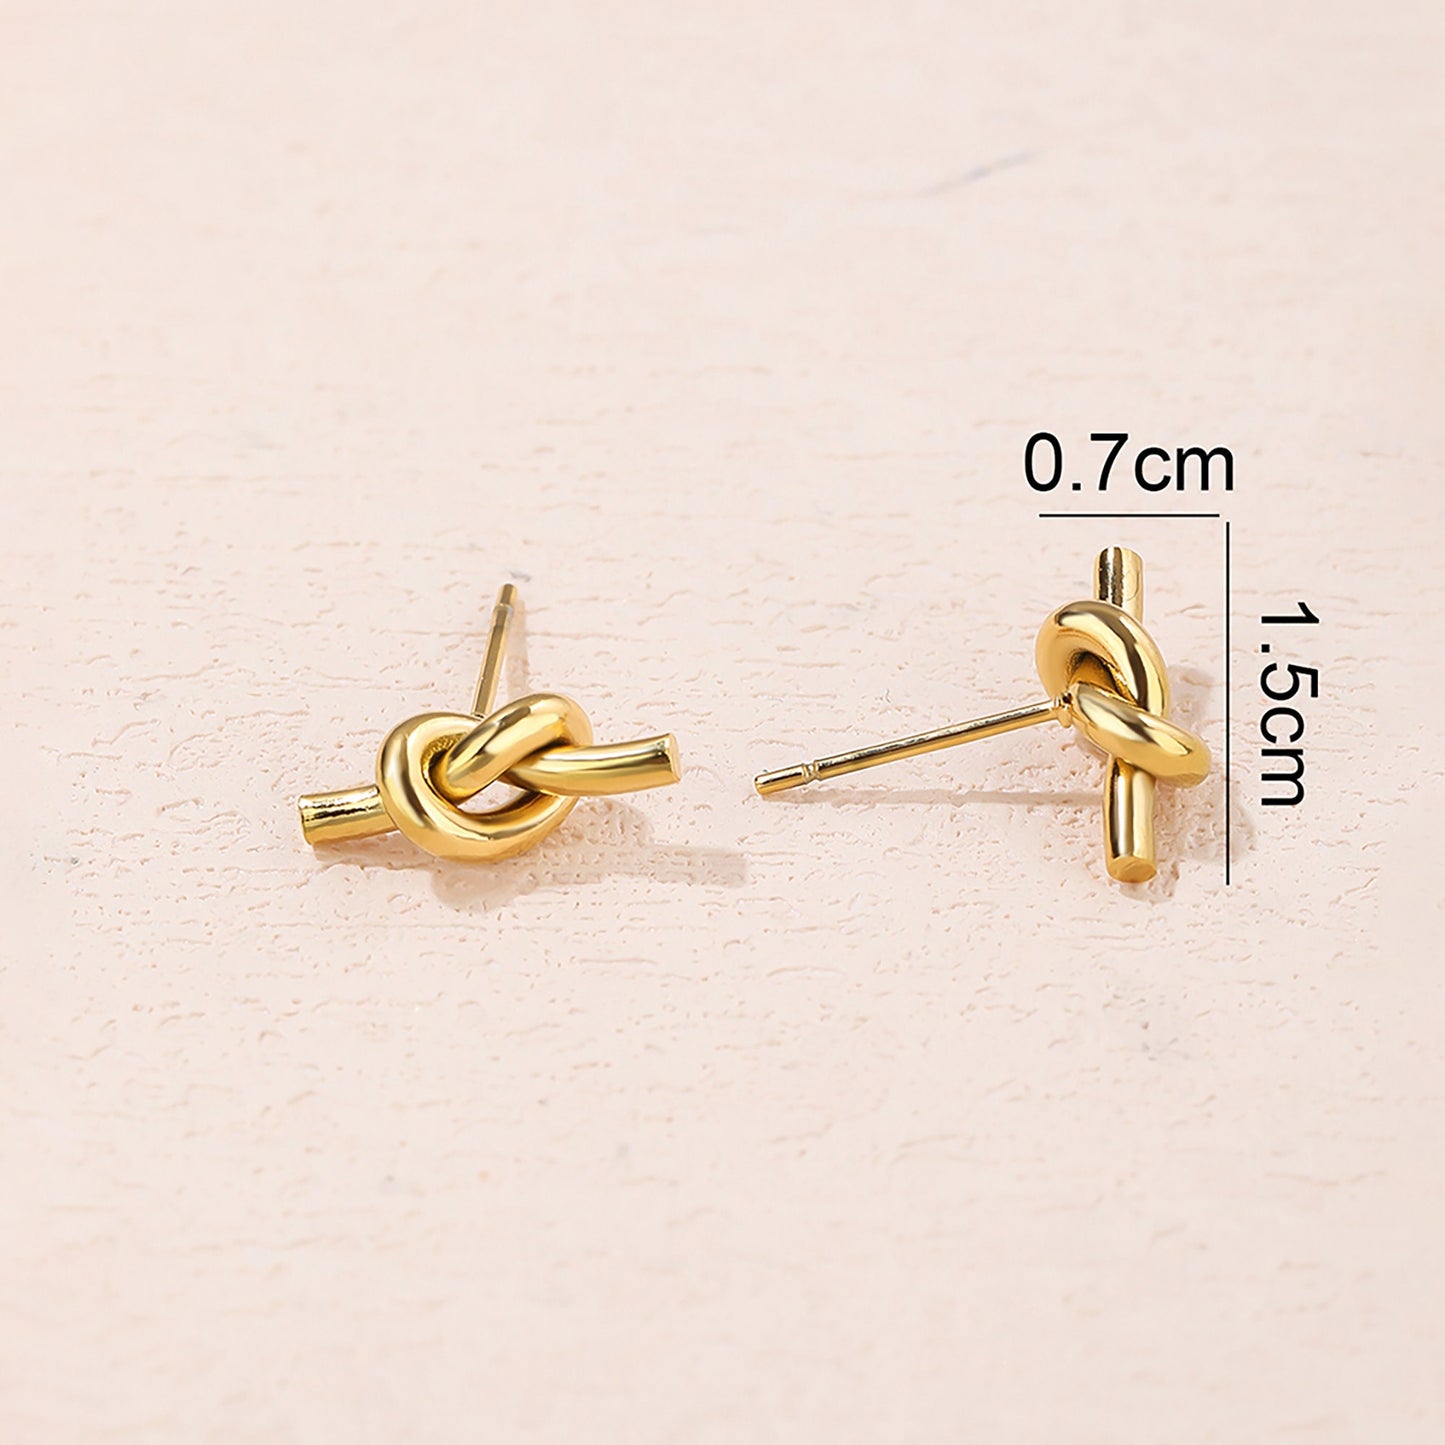 Titanium Knot Stud Earrings, Non Tarnish Earrings, Implant Grade Titanium Waterproof Earrings, Vintage Style Earrings, Minimal Earrings